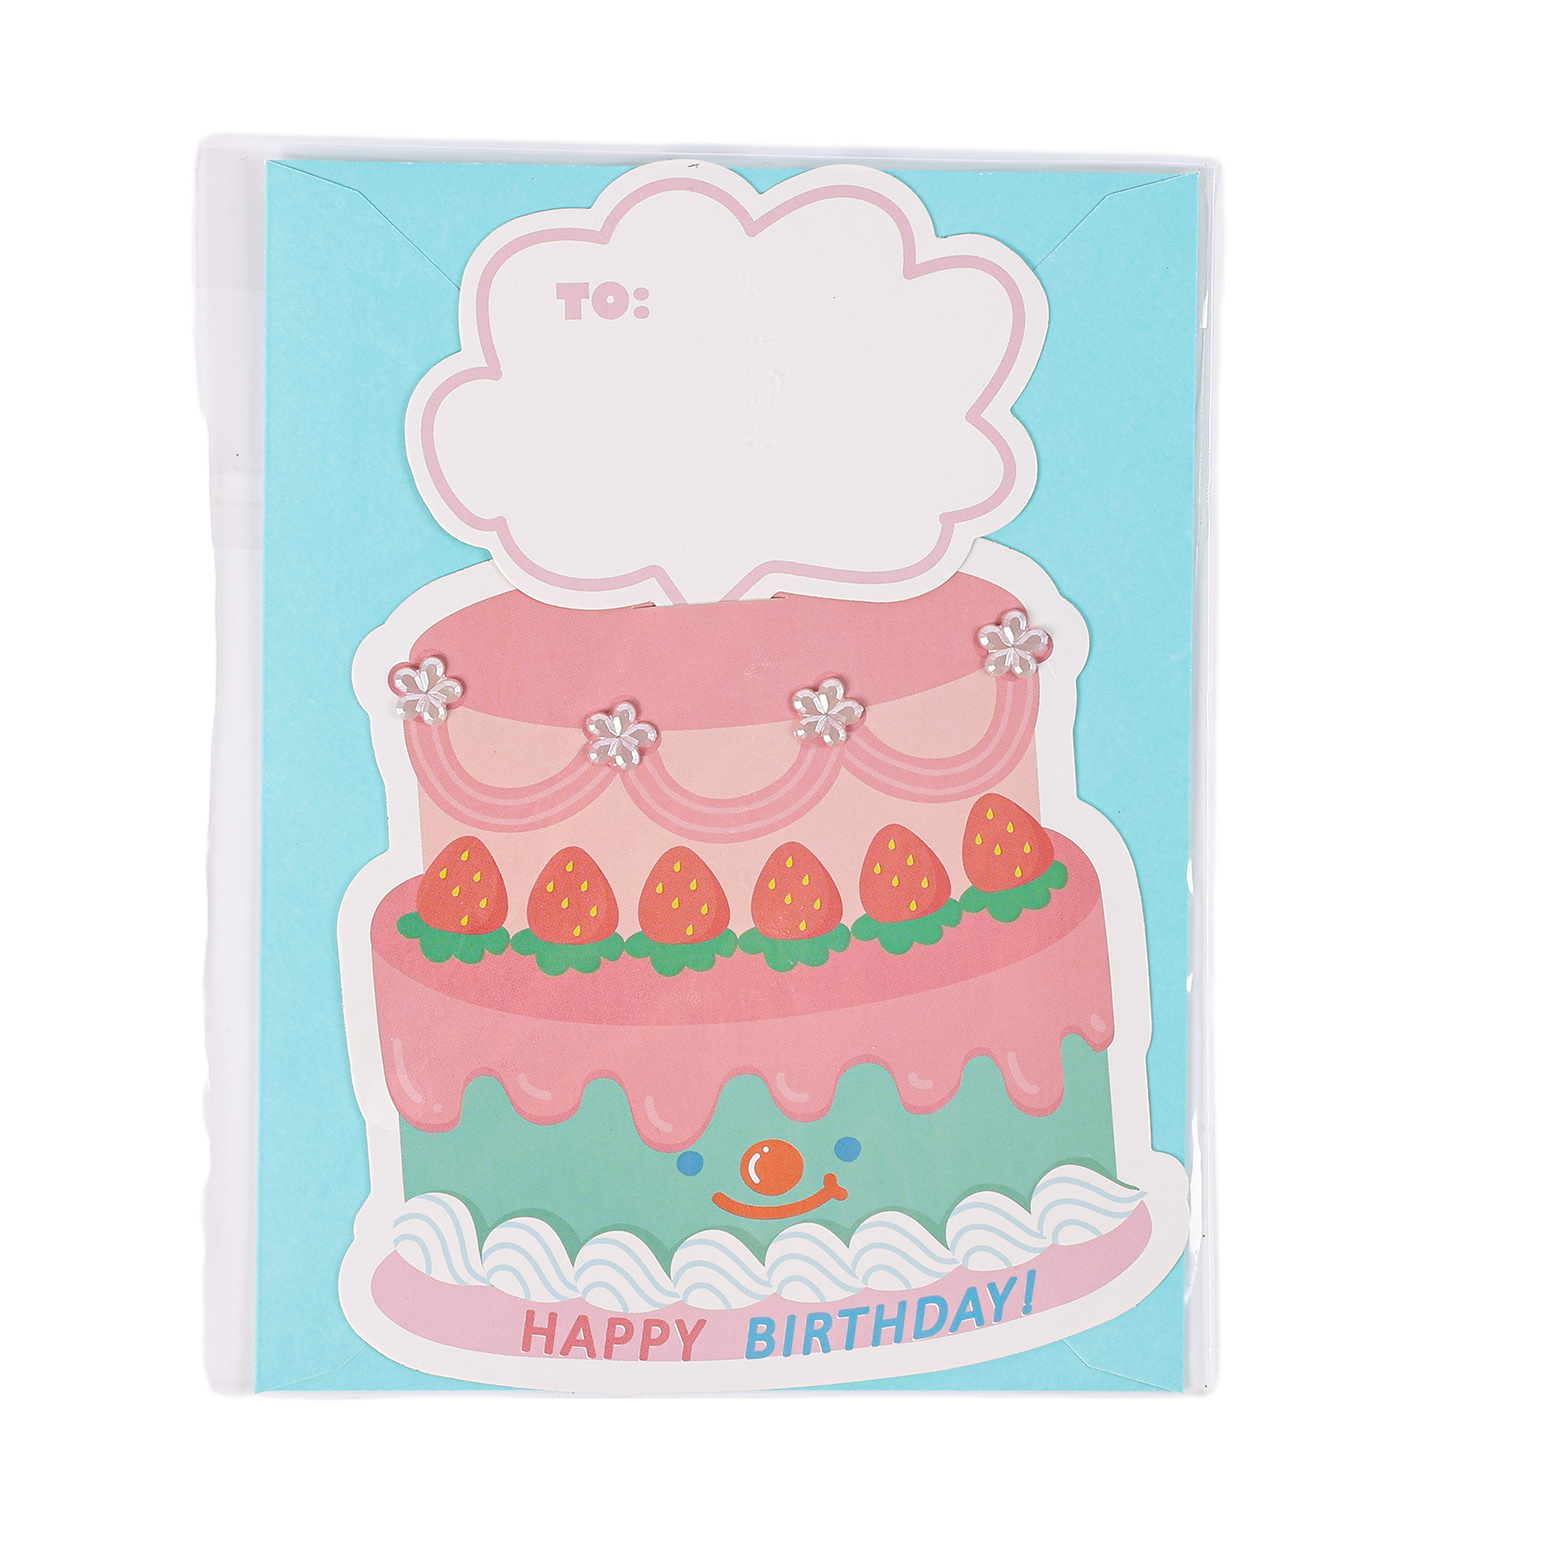 Cute strawberry cake birthday card BA009